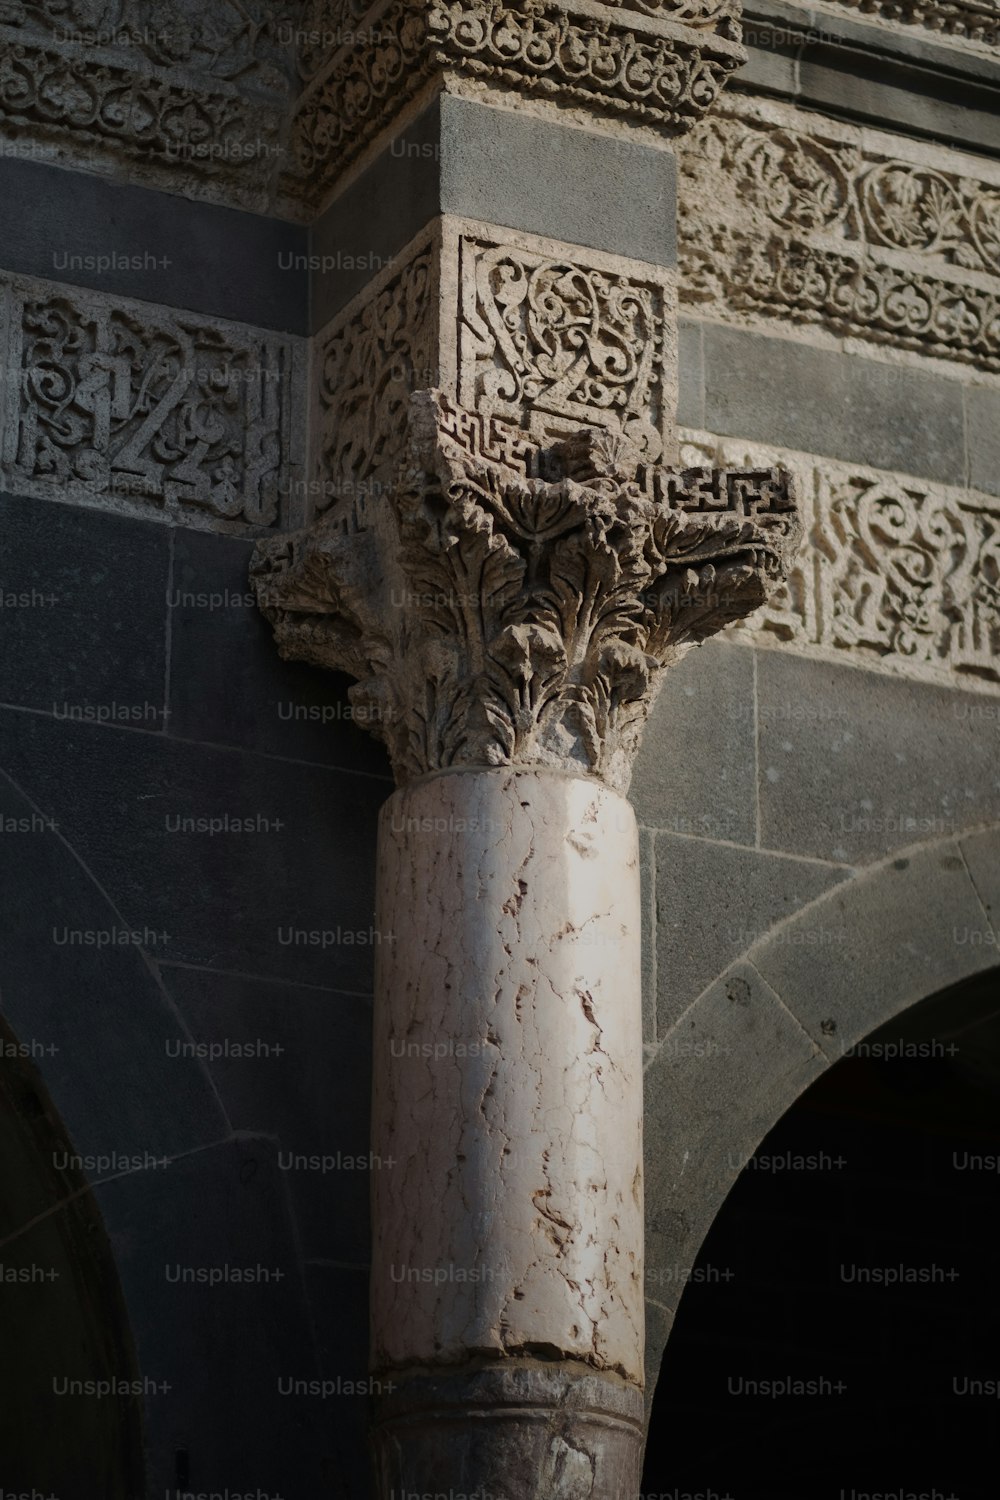 a close up of a pillar on a building